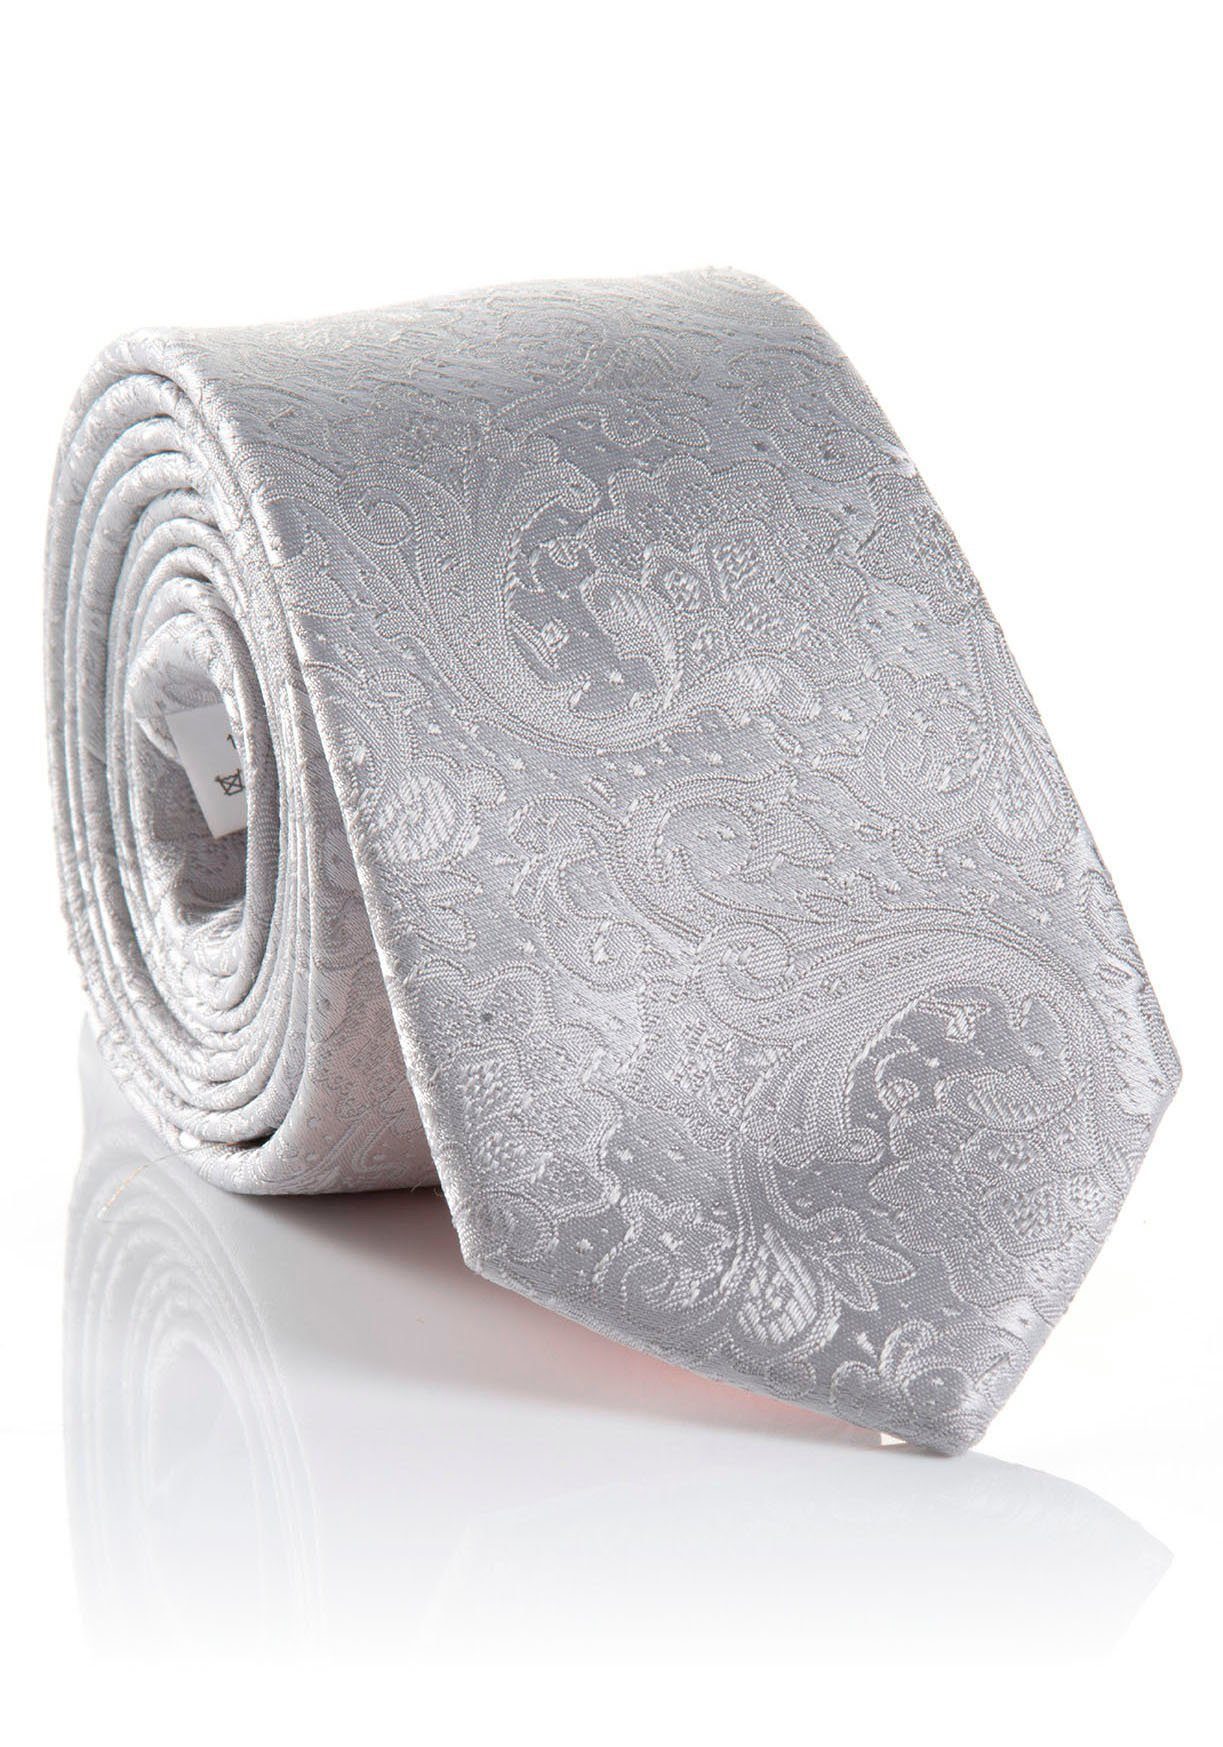 Paisley-Muster aus Seide, Krawatte reiner Krawatte silver LELIO MONTI